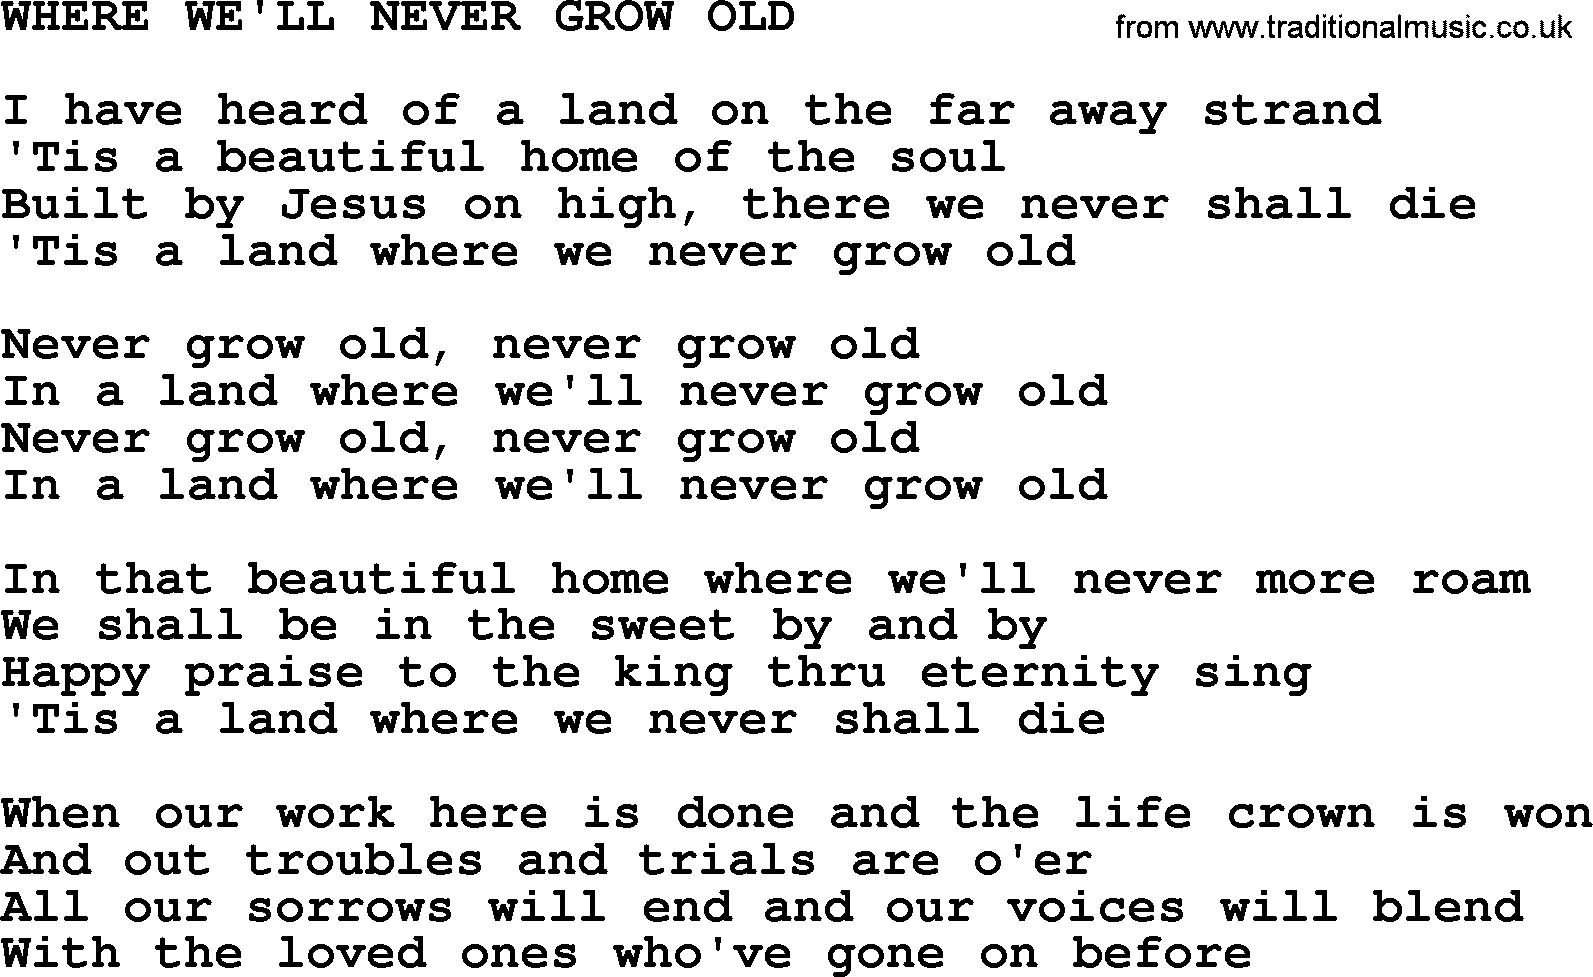 Johnny Cash song Where We'll Never Grow Old.txt lyrics